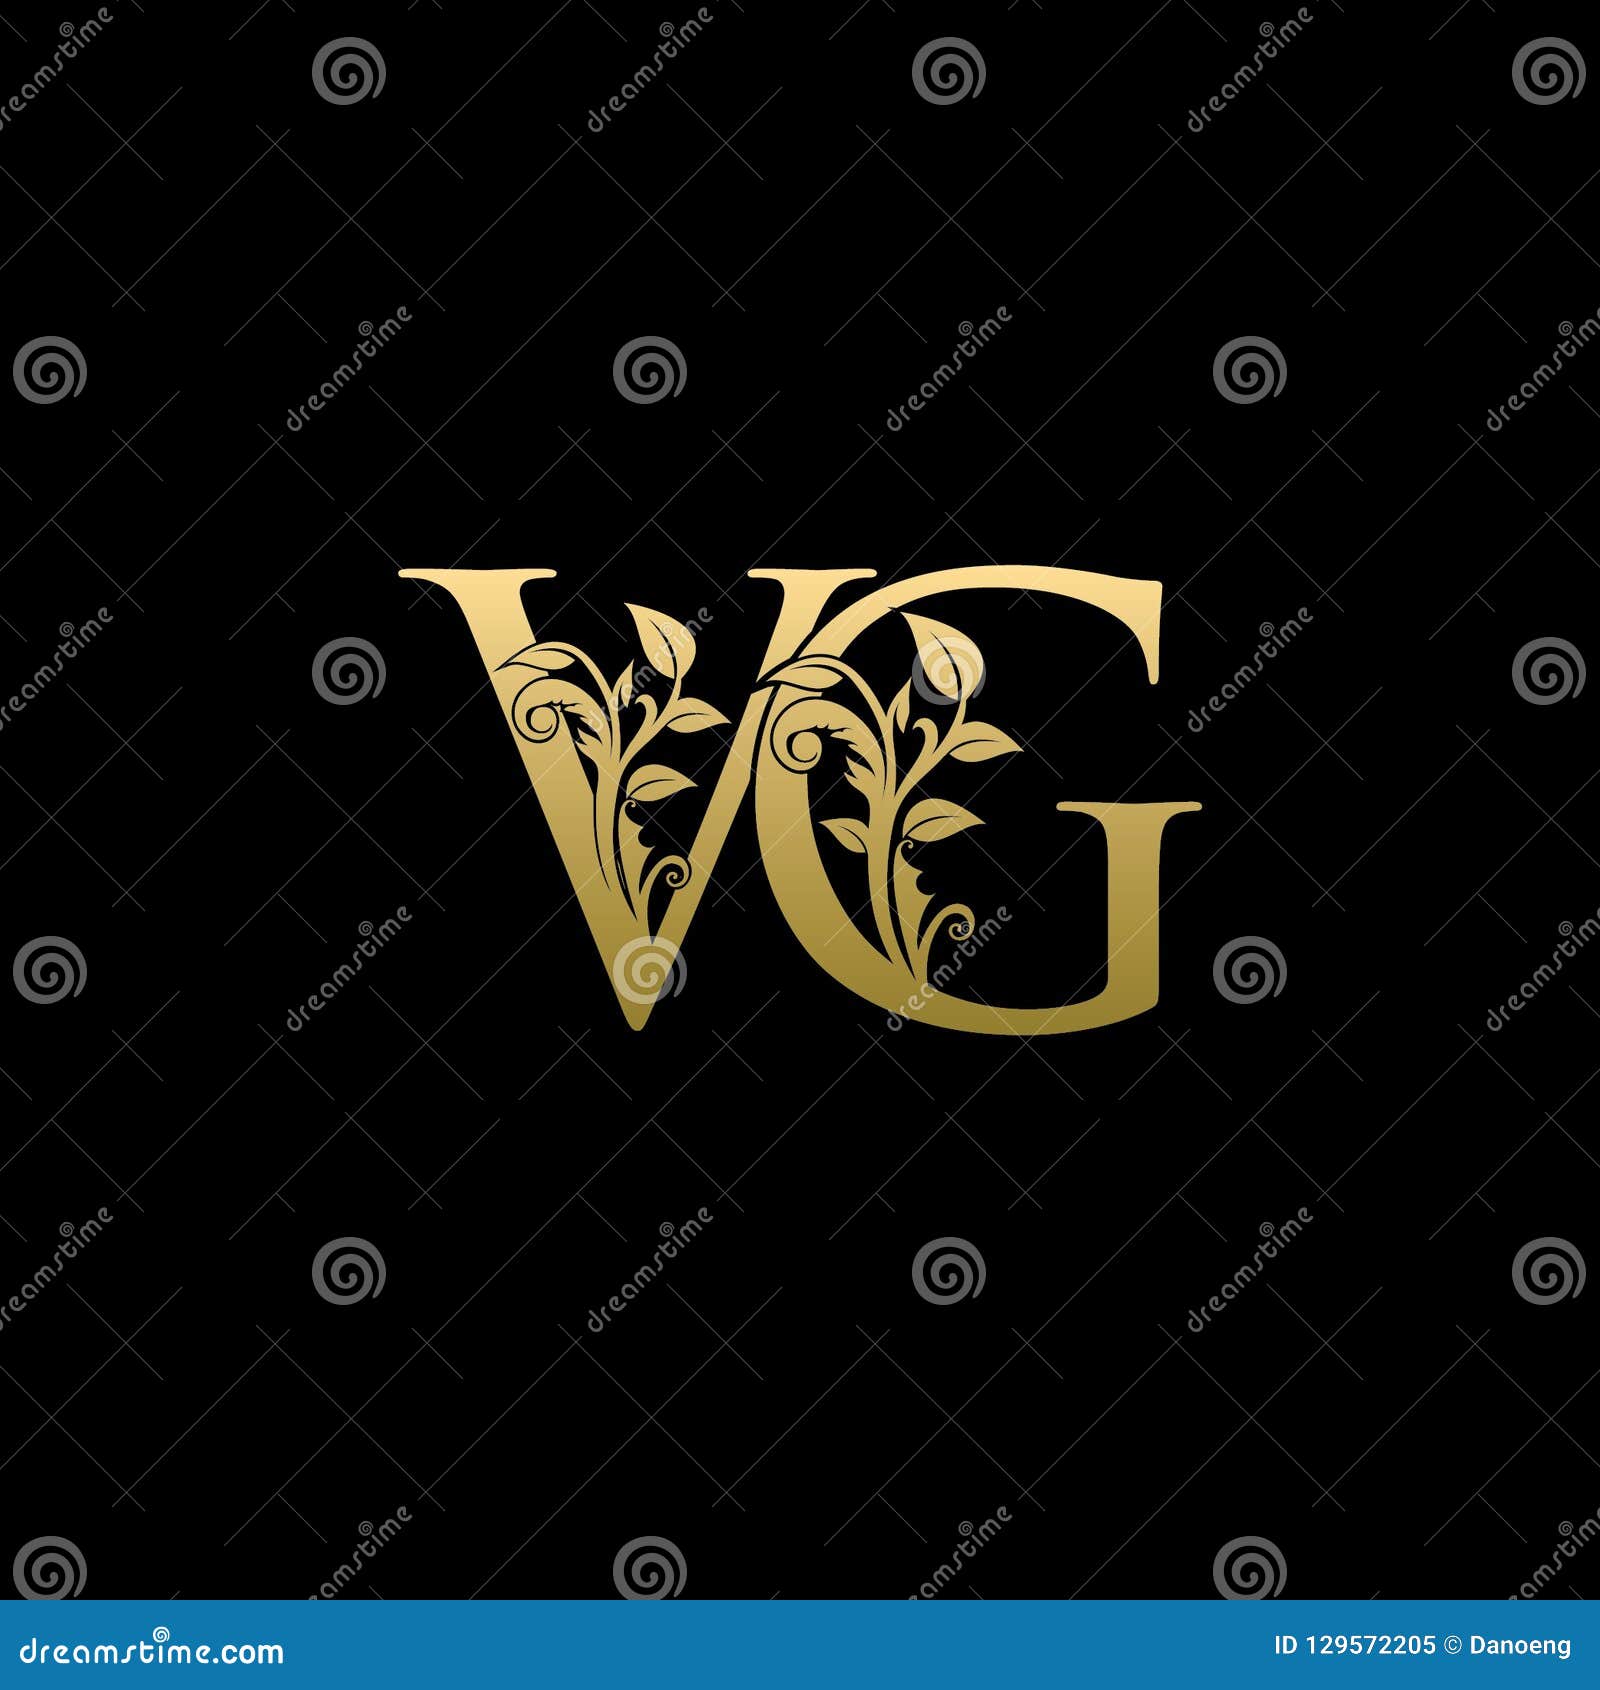 Classy Gold Leaf Vg Letter Logo Stock Illustration Illustration Of Glamour Brochure